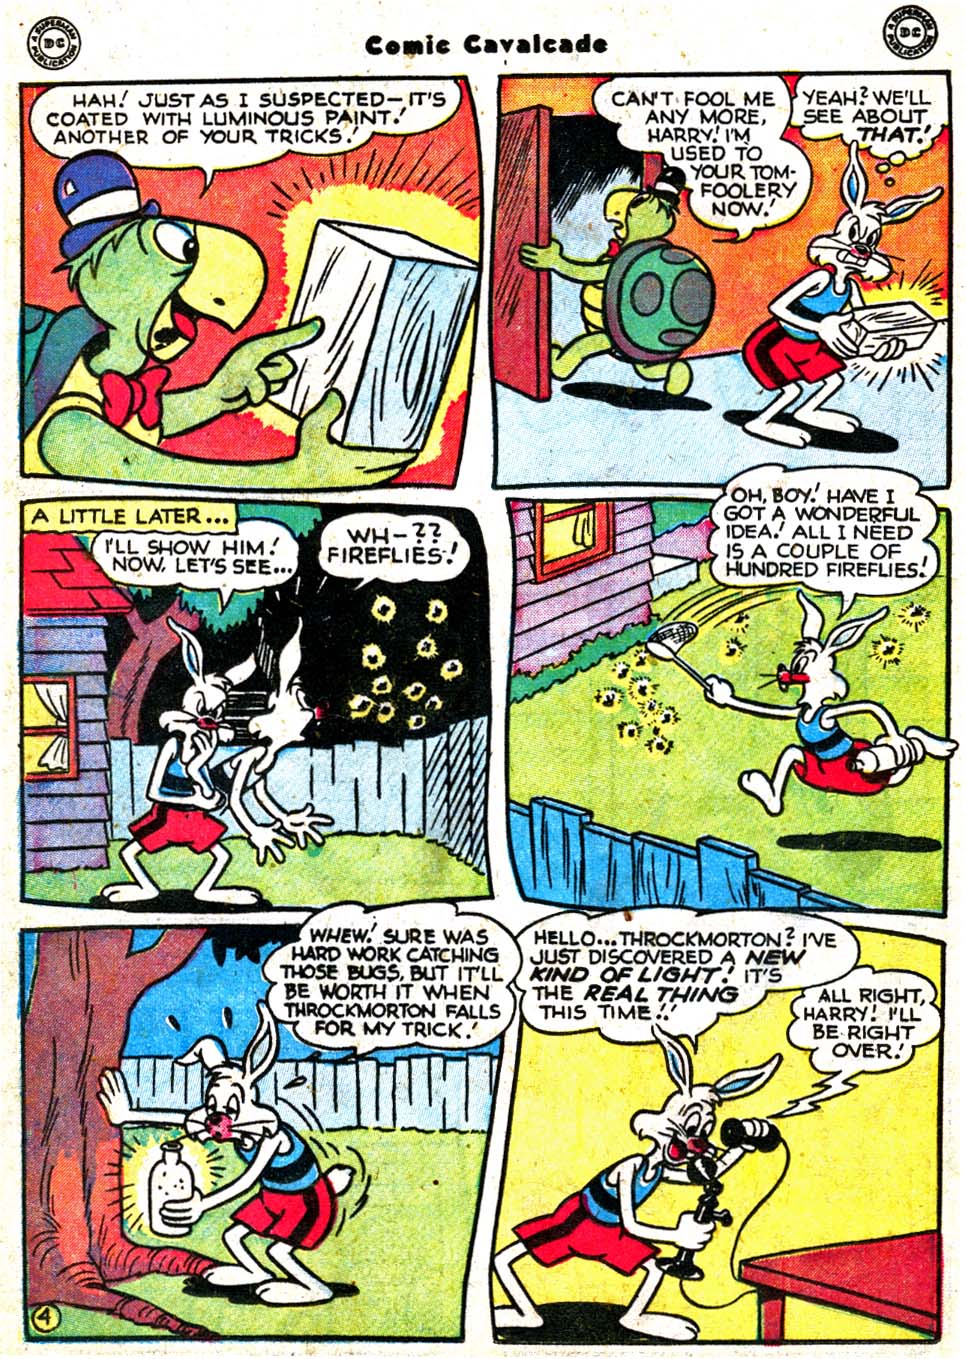 Comic Cavalcade issue 31 - Page 28